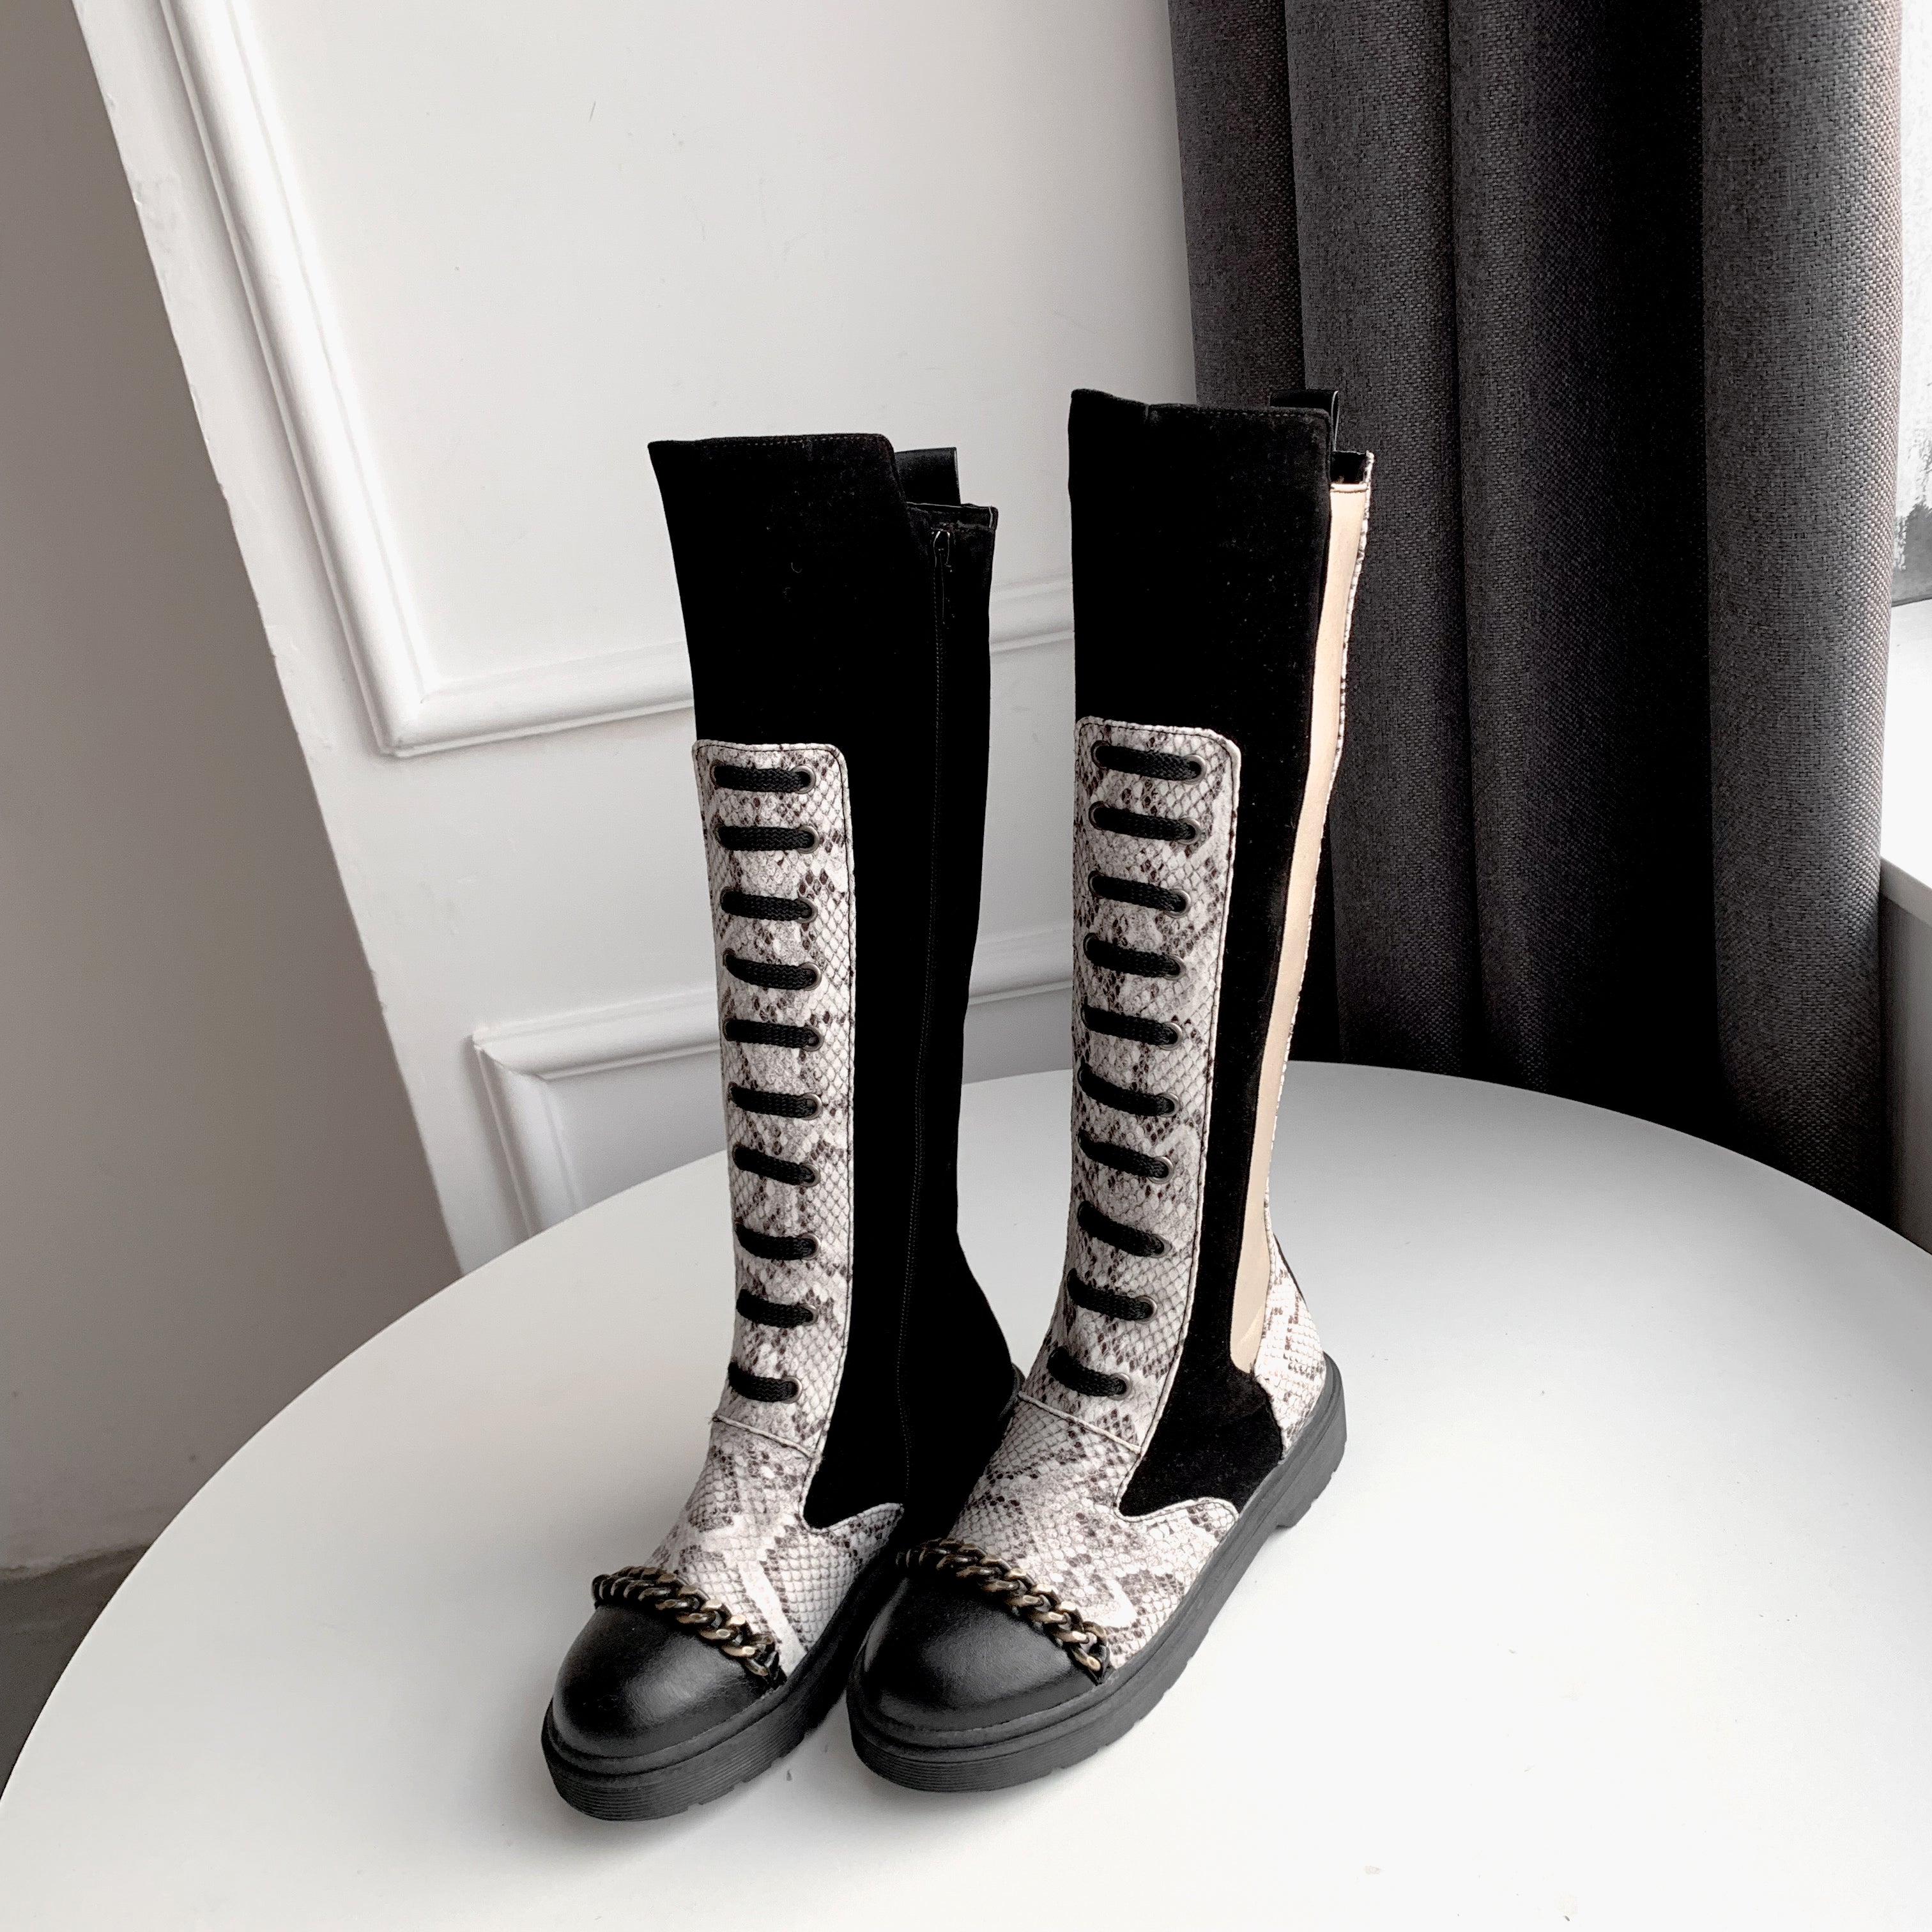 Bigsizeheels Round toe punk spliced flat boots - White freeshipping - bigsizeheel®-size5-size15 -All Plus Sizes Available!